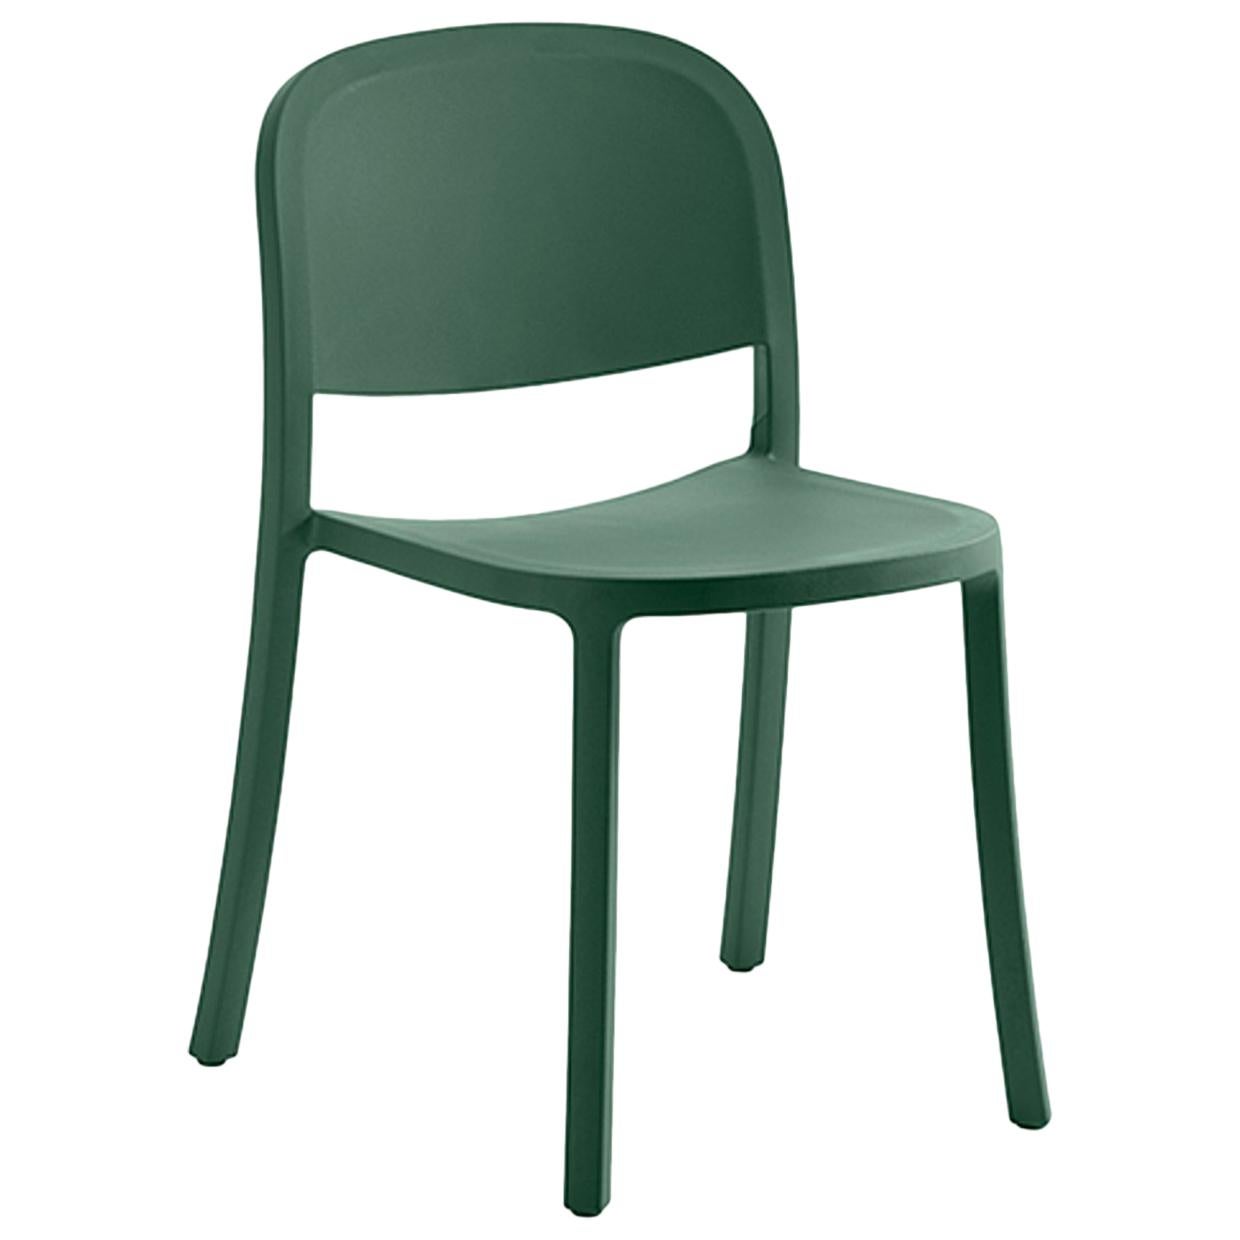 Emeco 1 Inch Reclaimed Chair in Green by Jasper Morrison